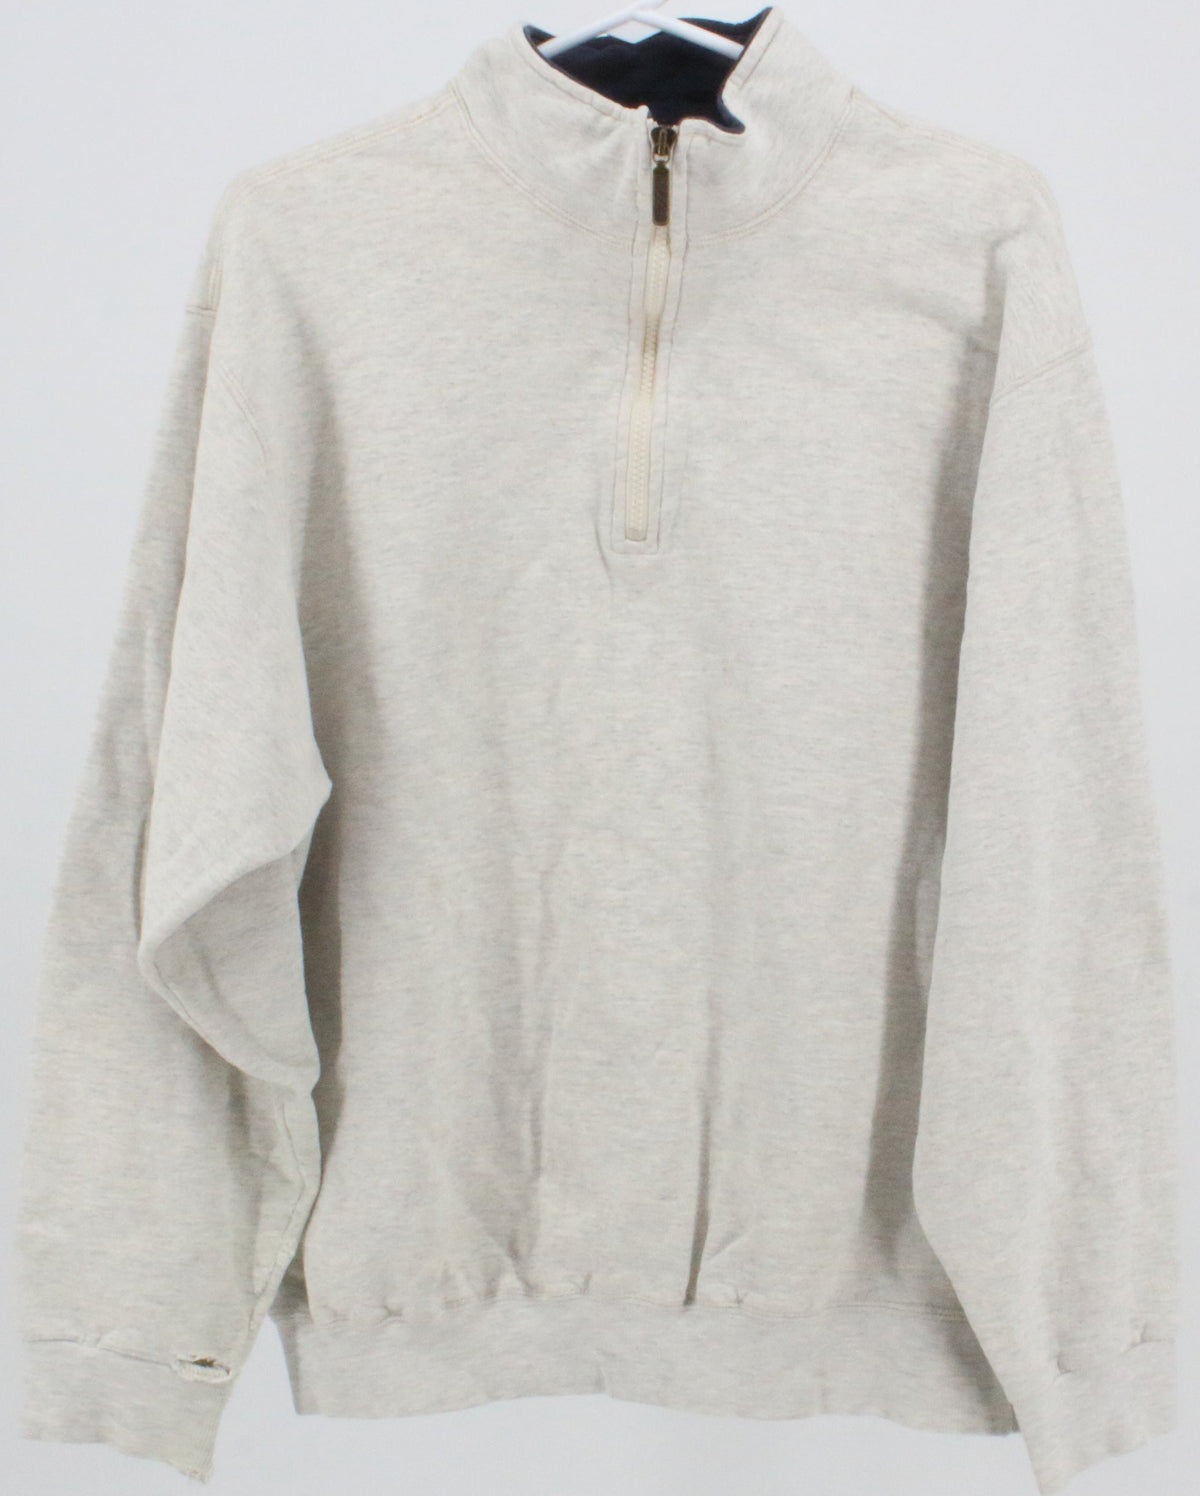 L.L.Bean Russel Athletic Light Grey Melange Mid Zip Sweatshirt